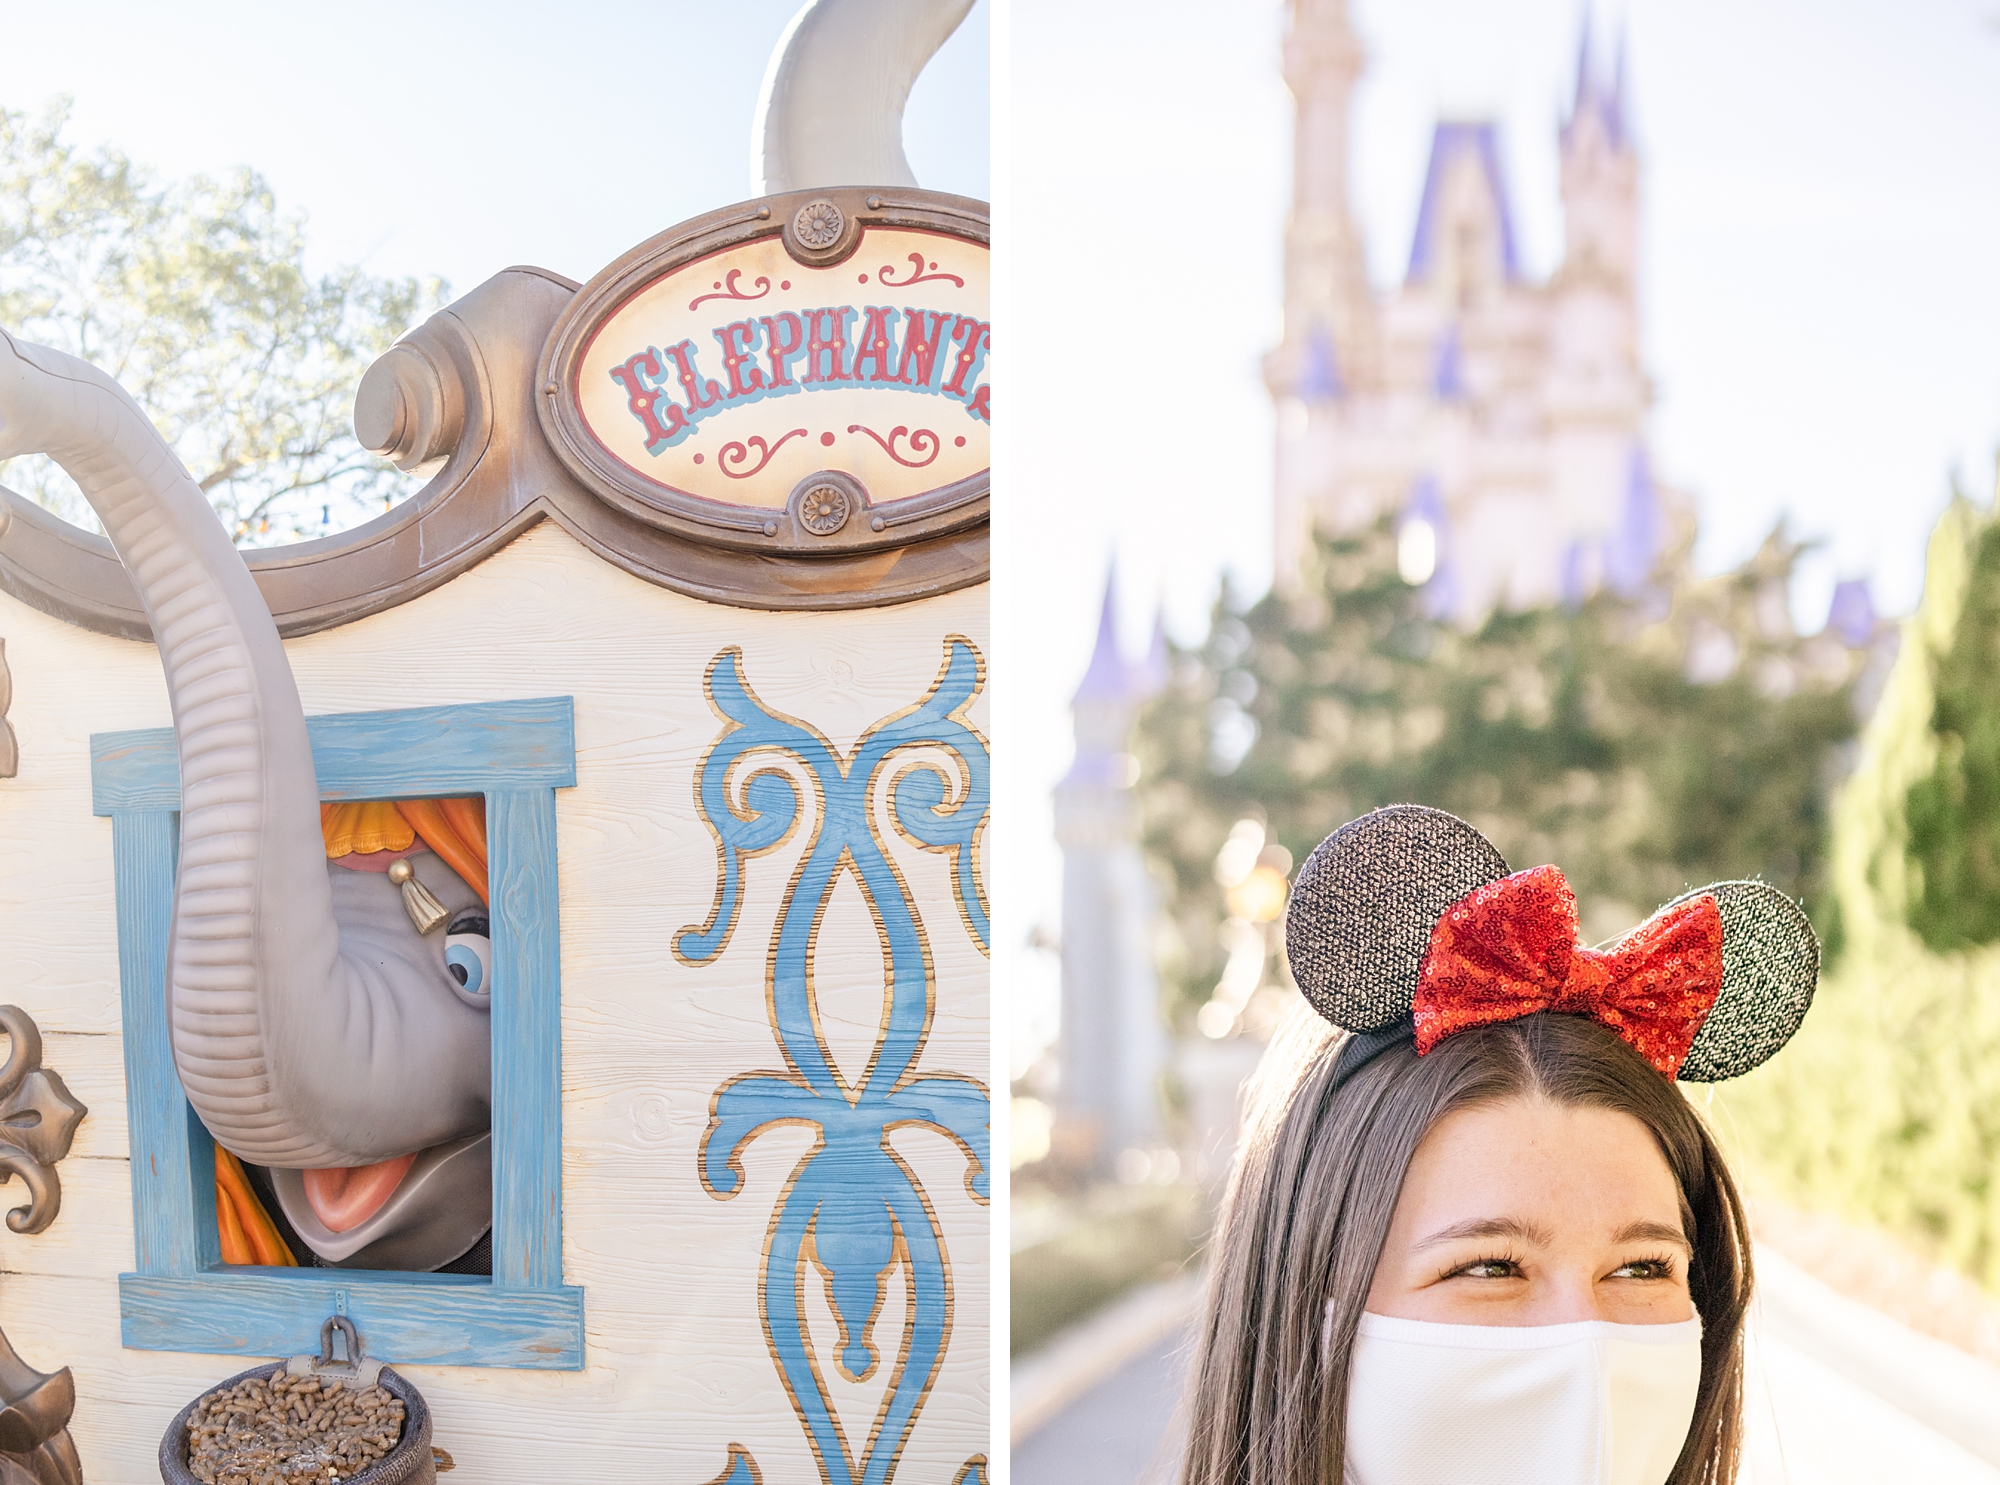 Magic Kingdom details at Walt Disney World